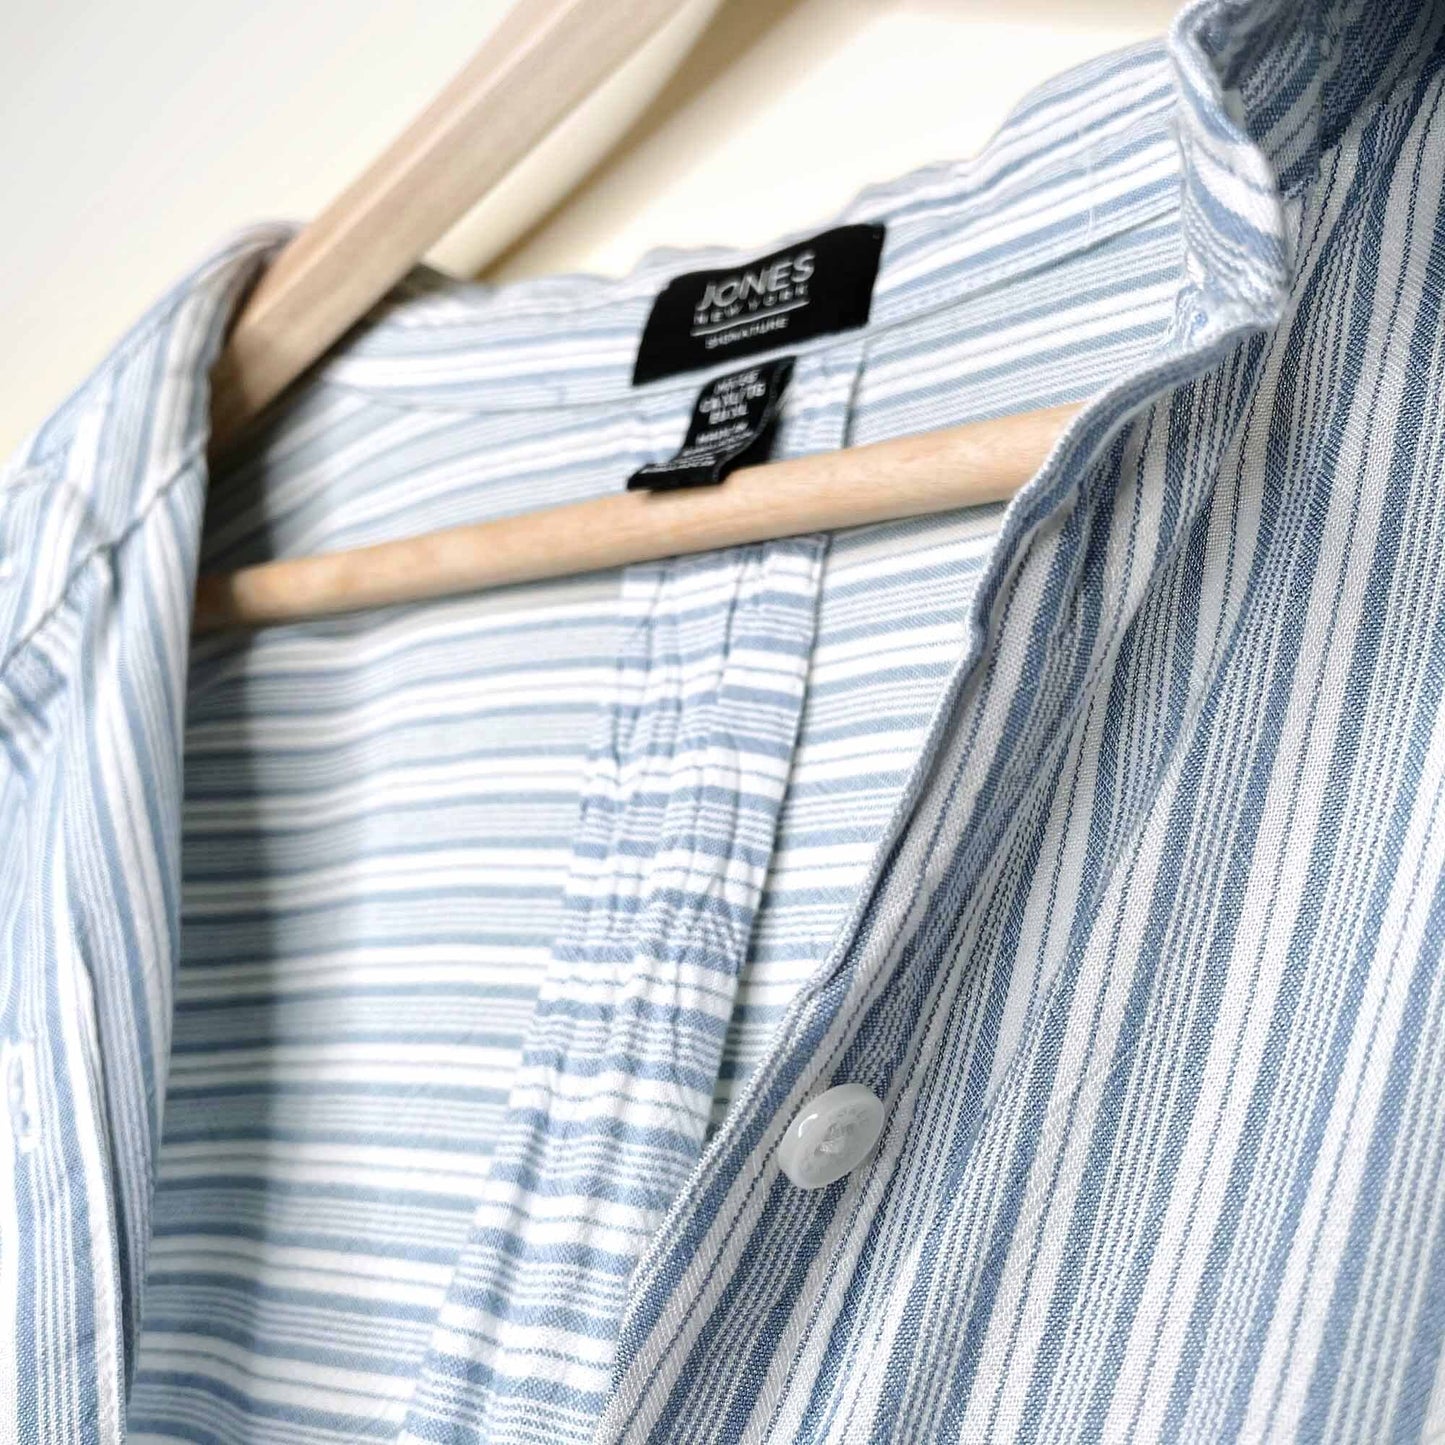 Jones New York Signature striped tie front button down - size XL